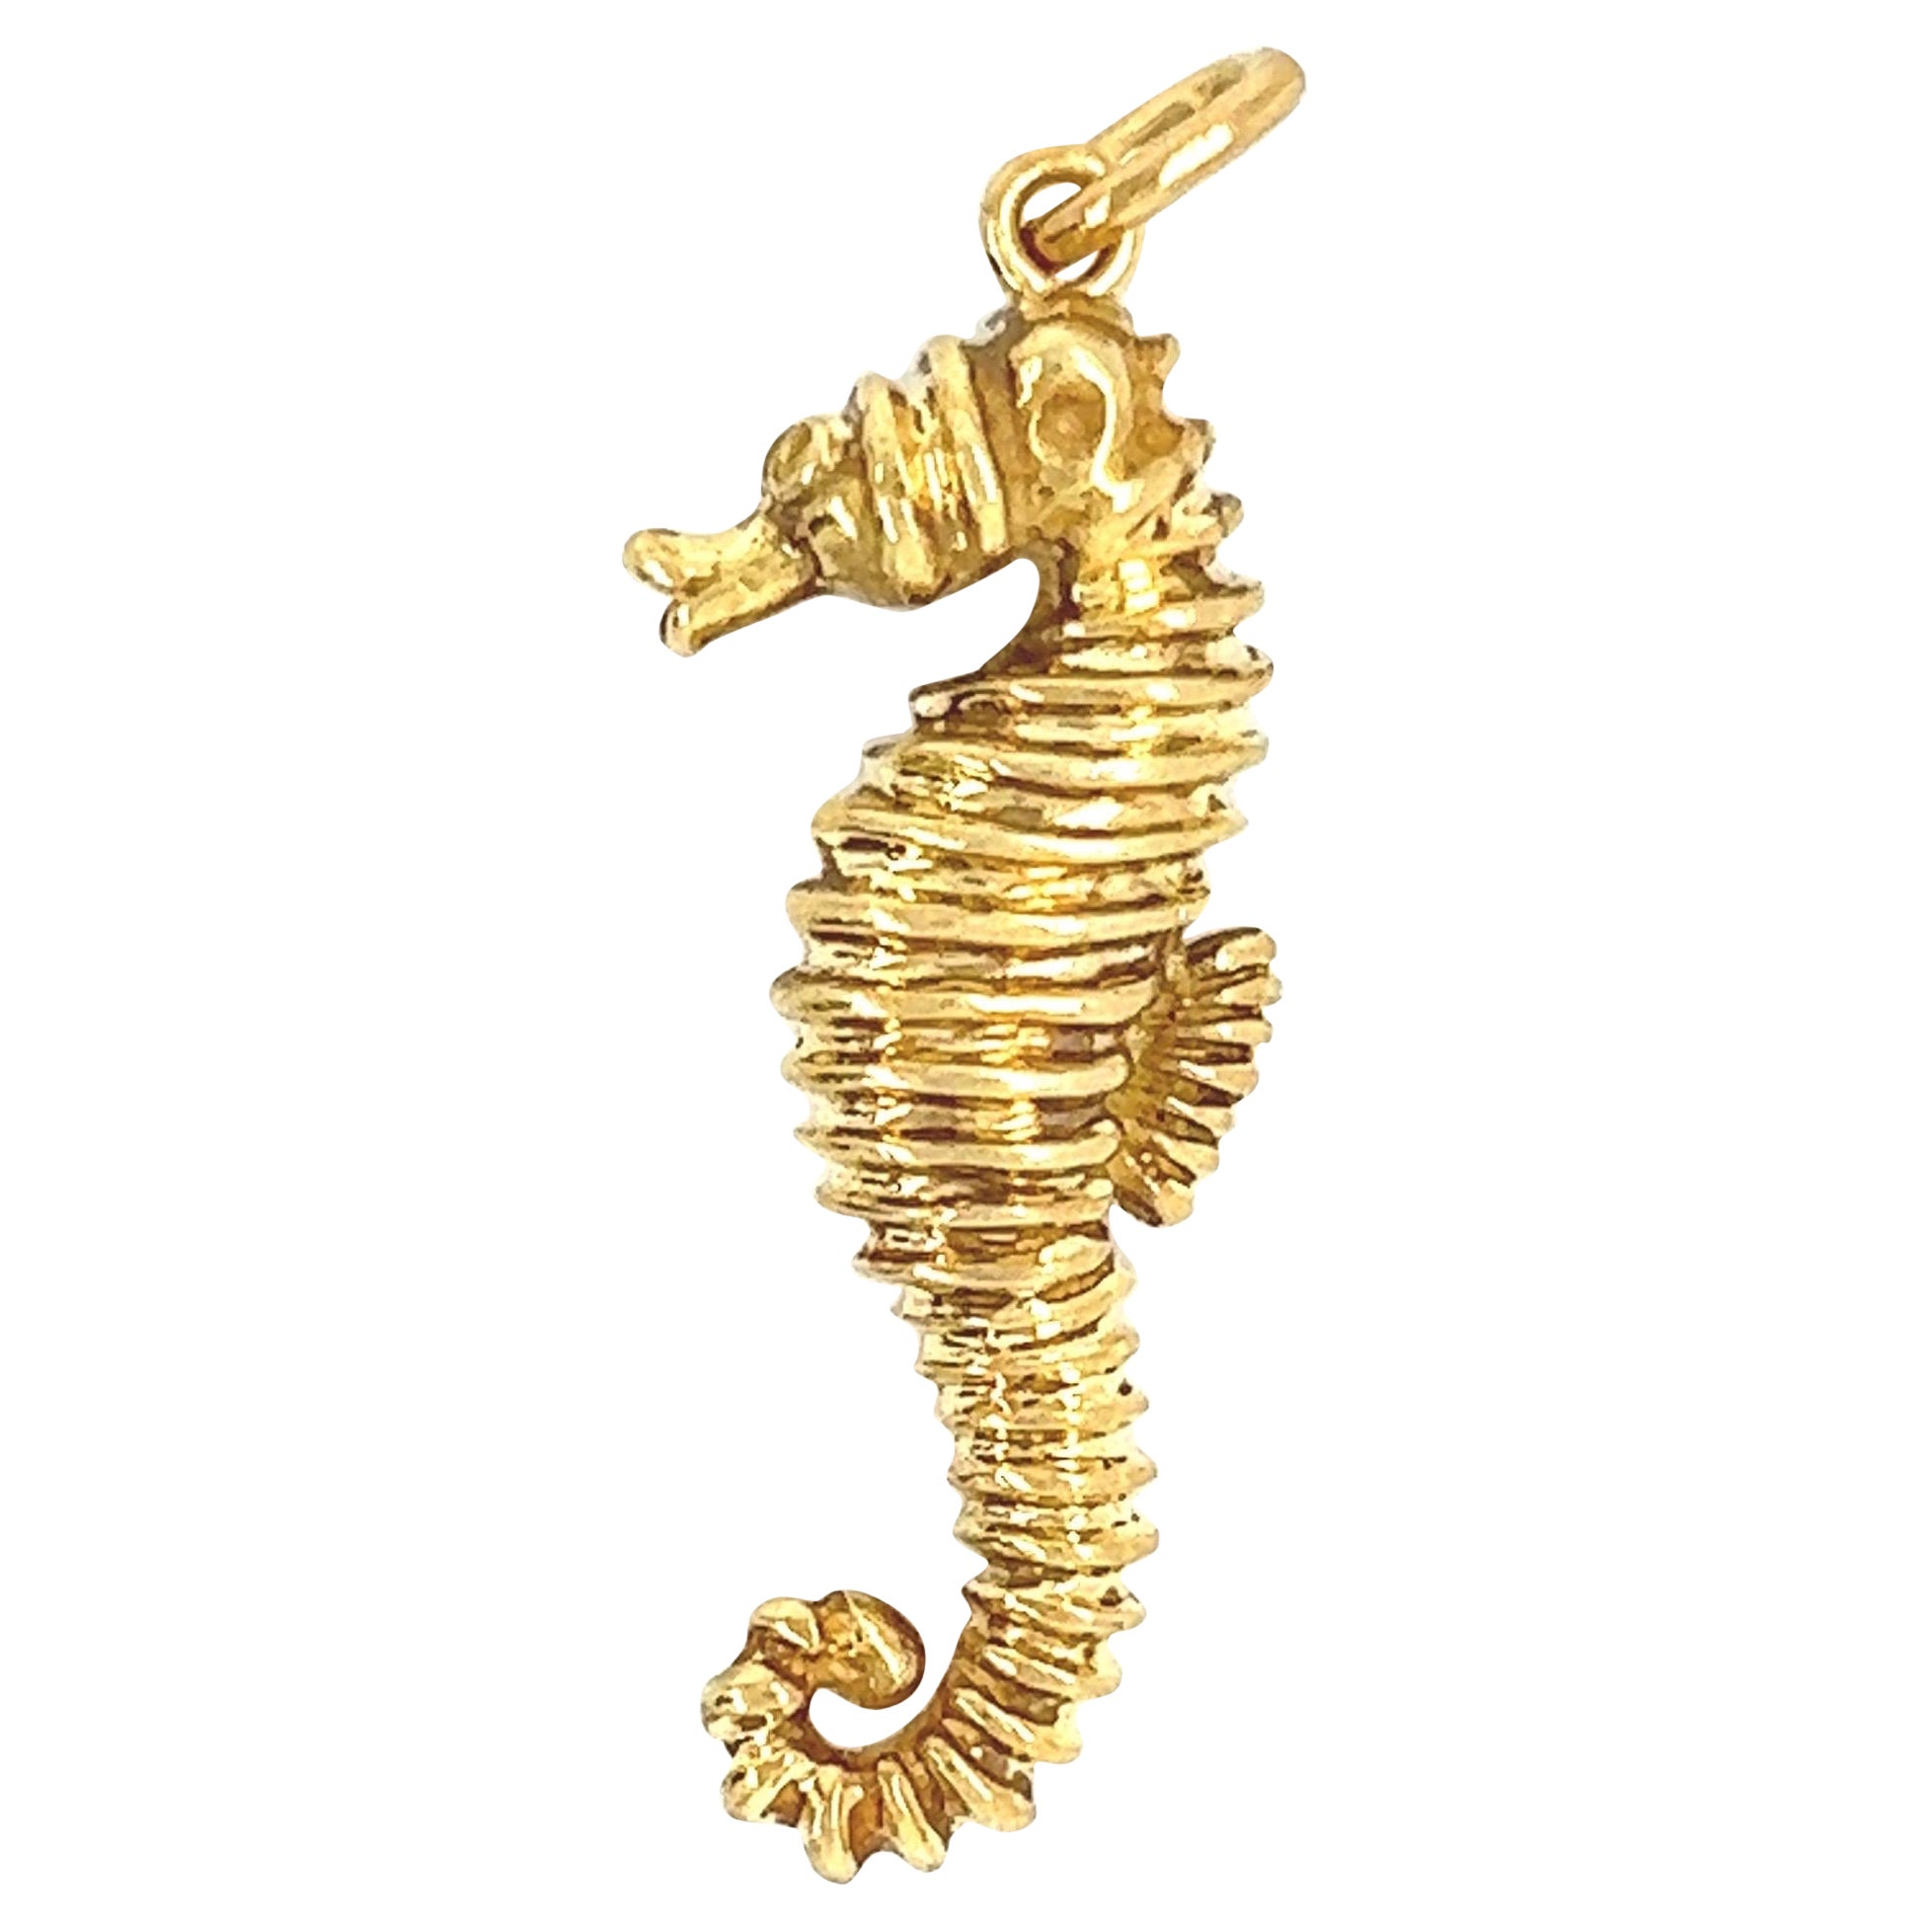 Seahorse Gold Charm Pendant